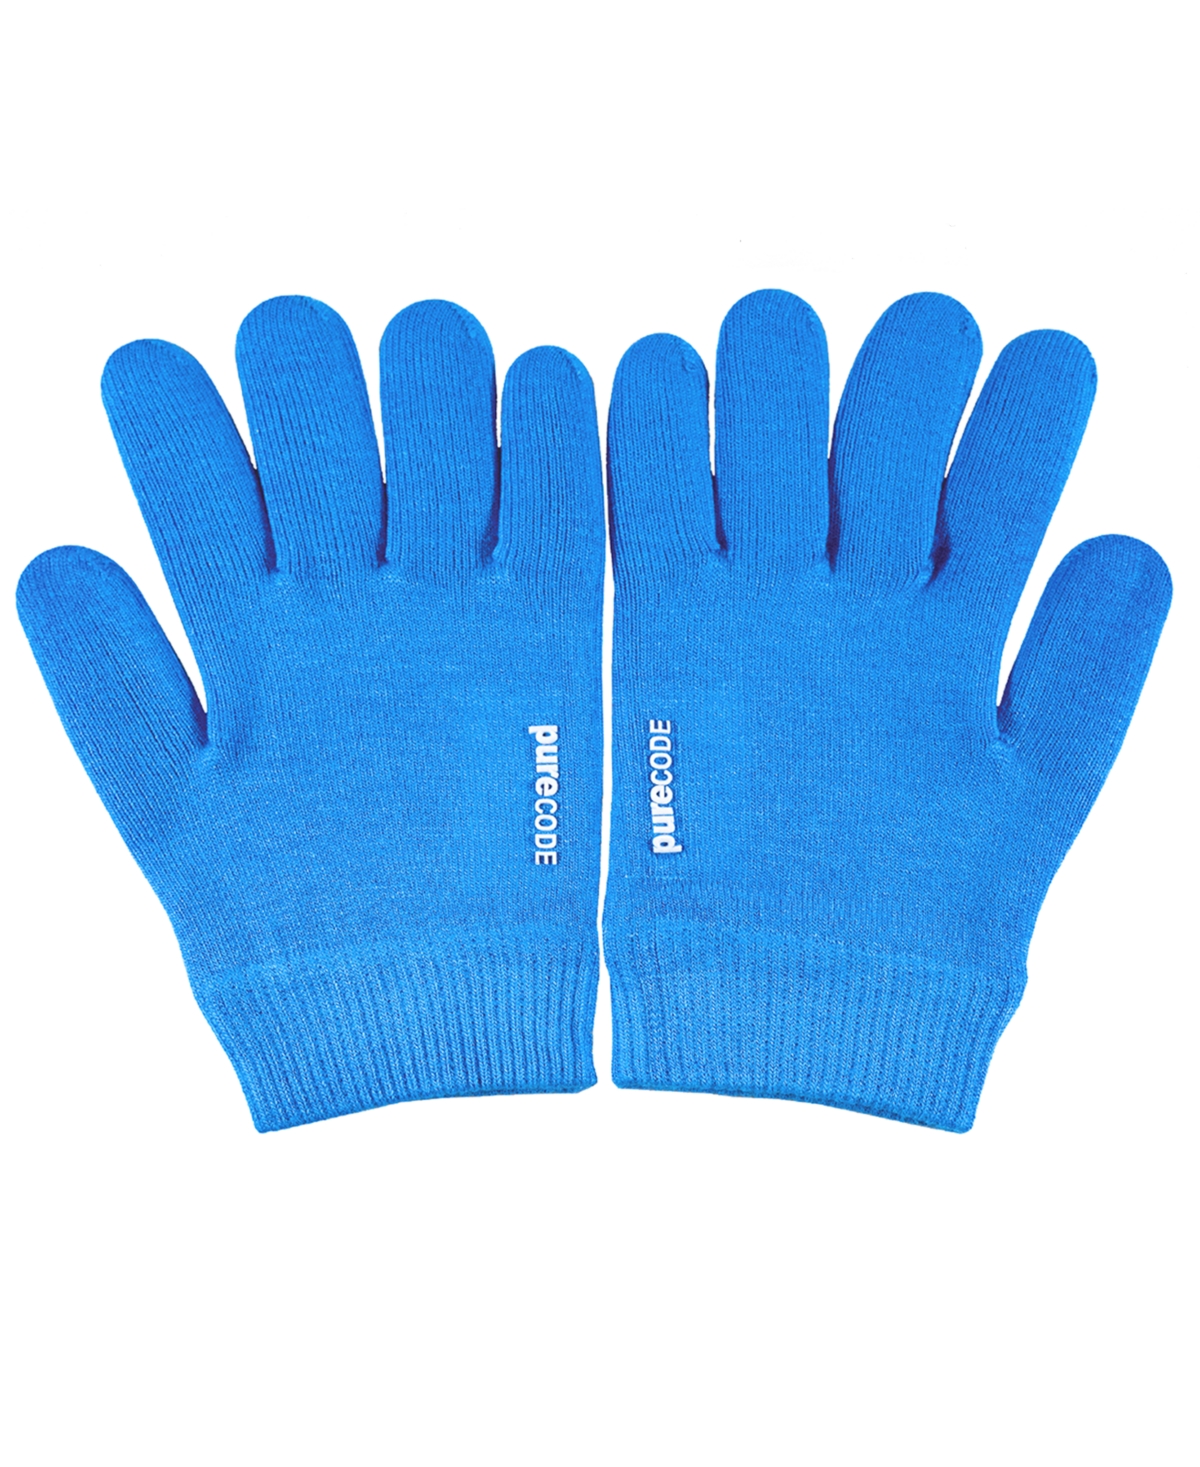 Moisturizing Gel Gloves Xl Men - Blue